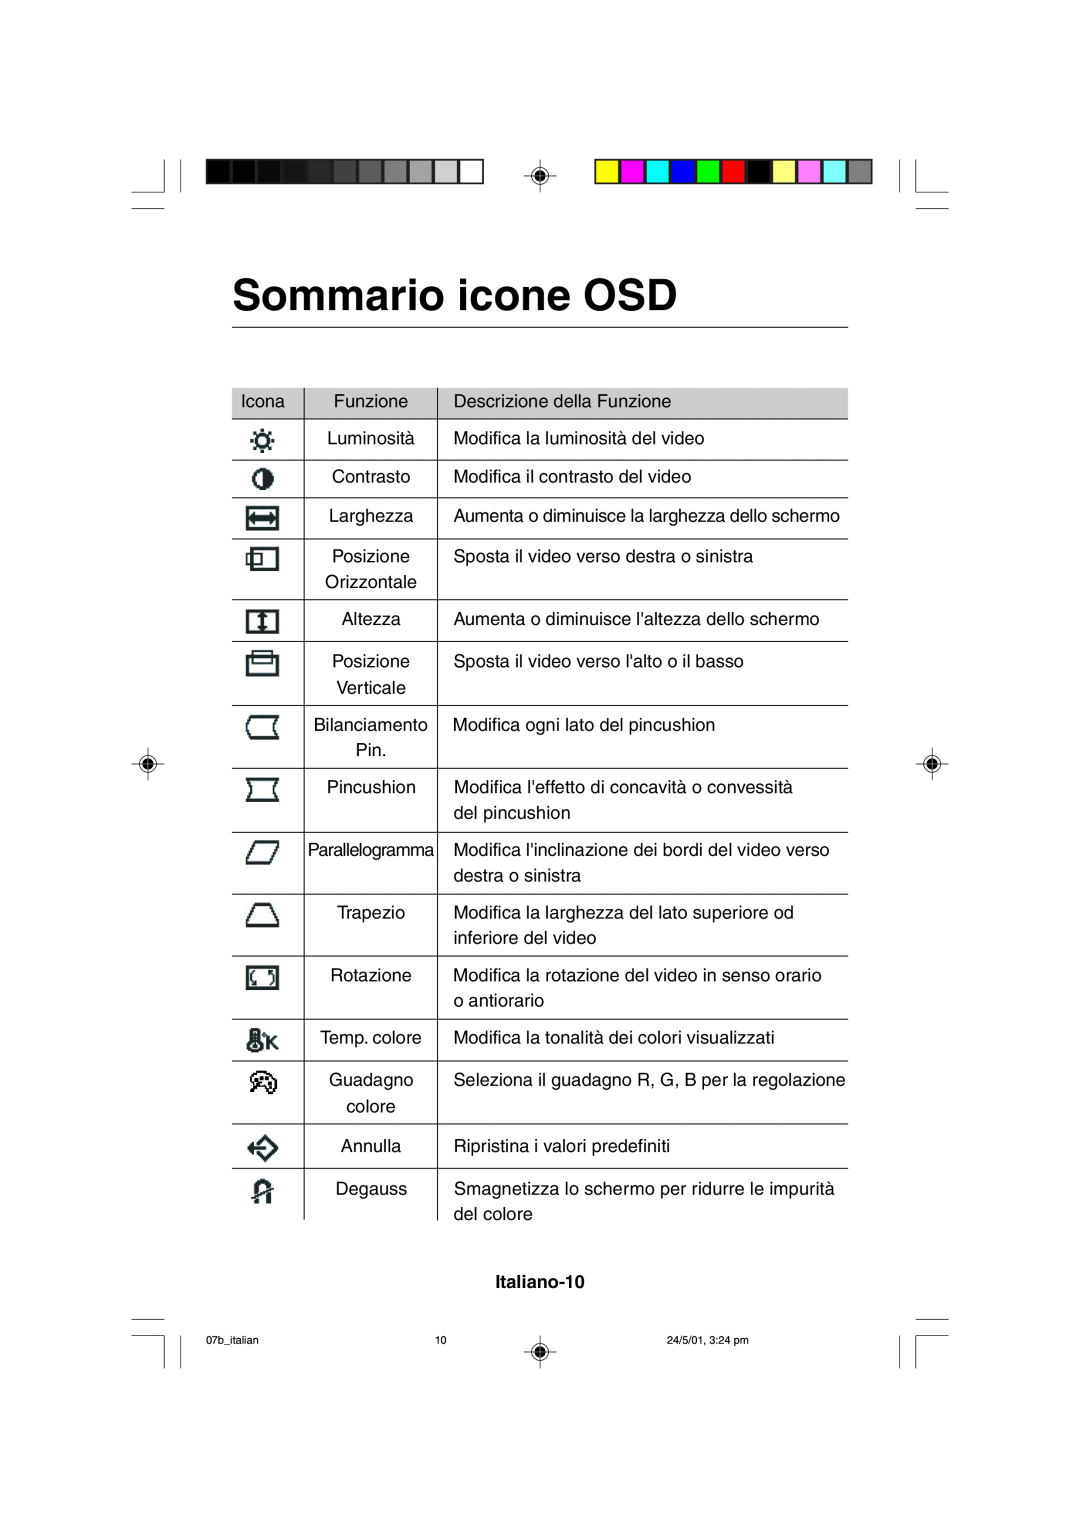 Mitsubishi Electronics M557 user manual Sommario icone OSD, Italiano-10 